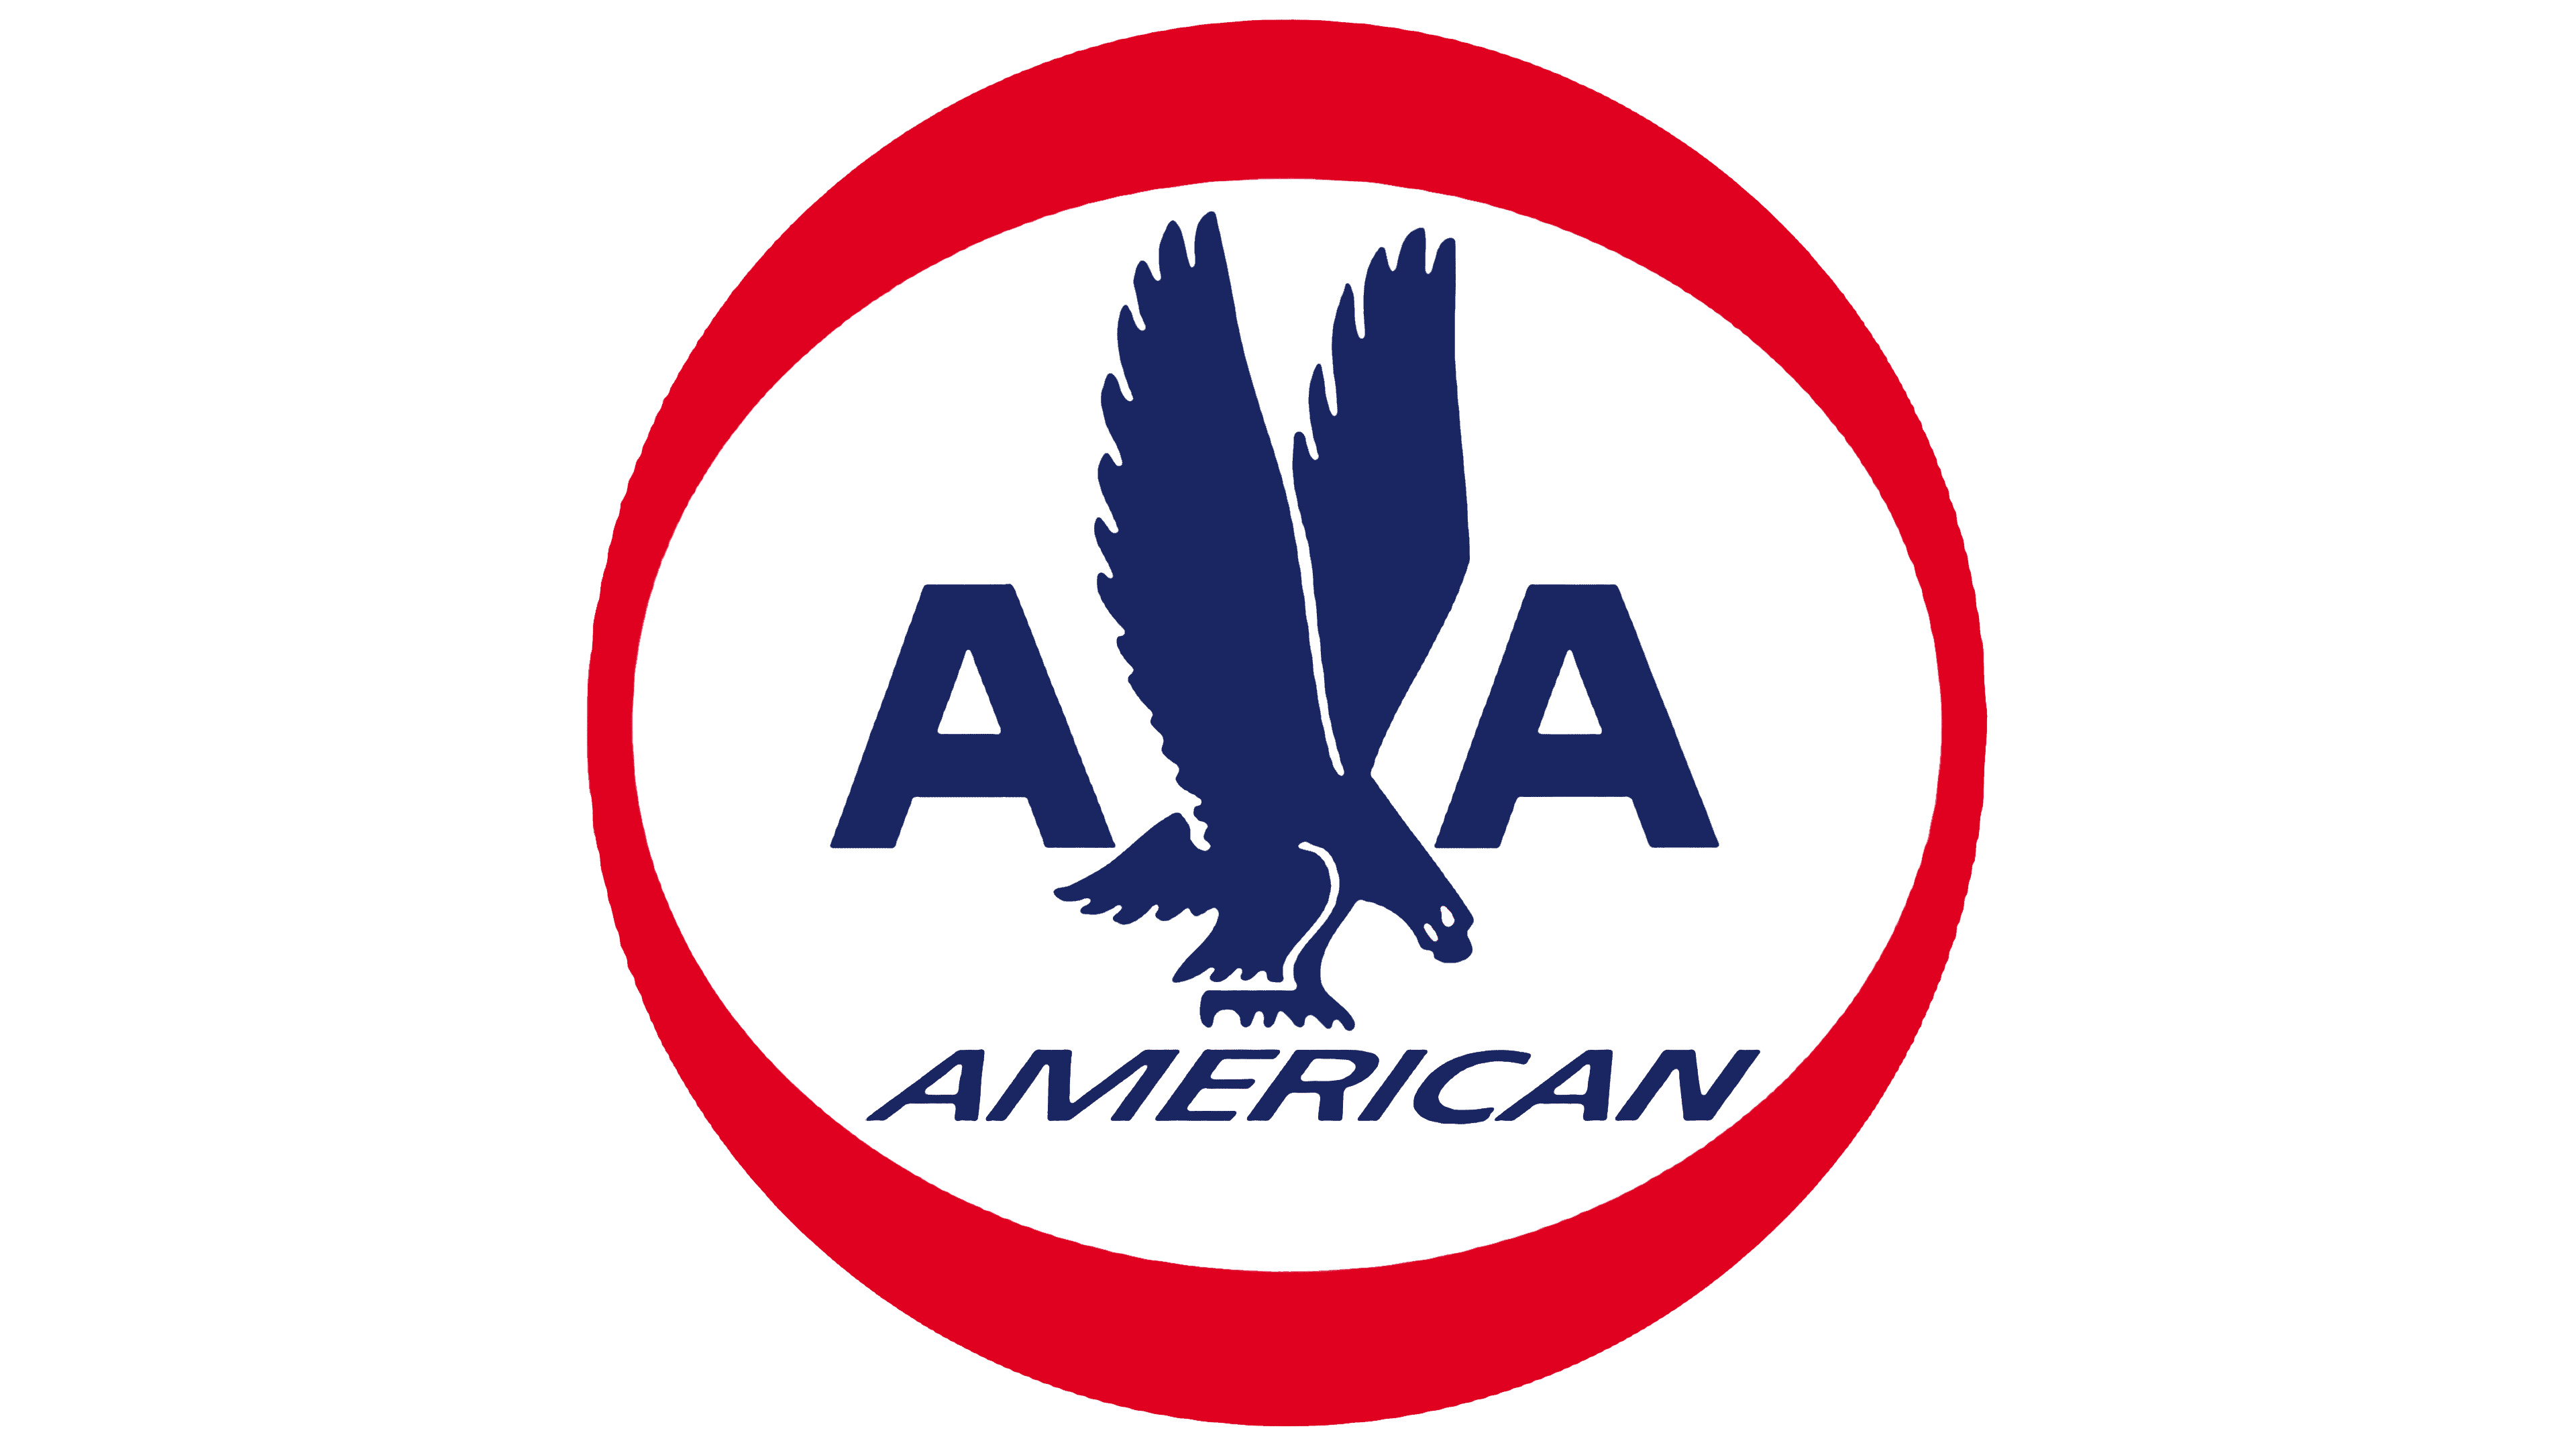 American Airlines, Brand logo, Symbol meaning, Airline brand, 3840x2160 4K Desktop